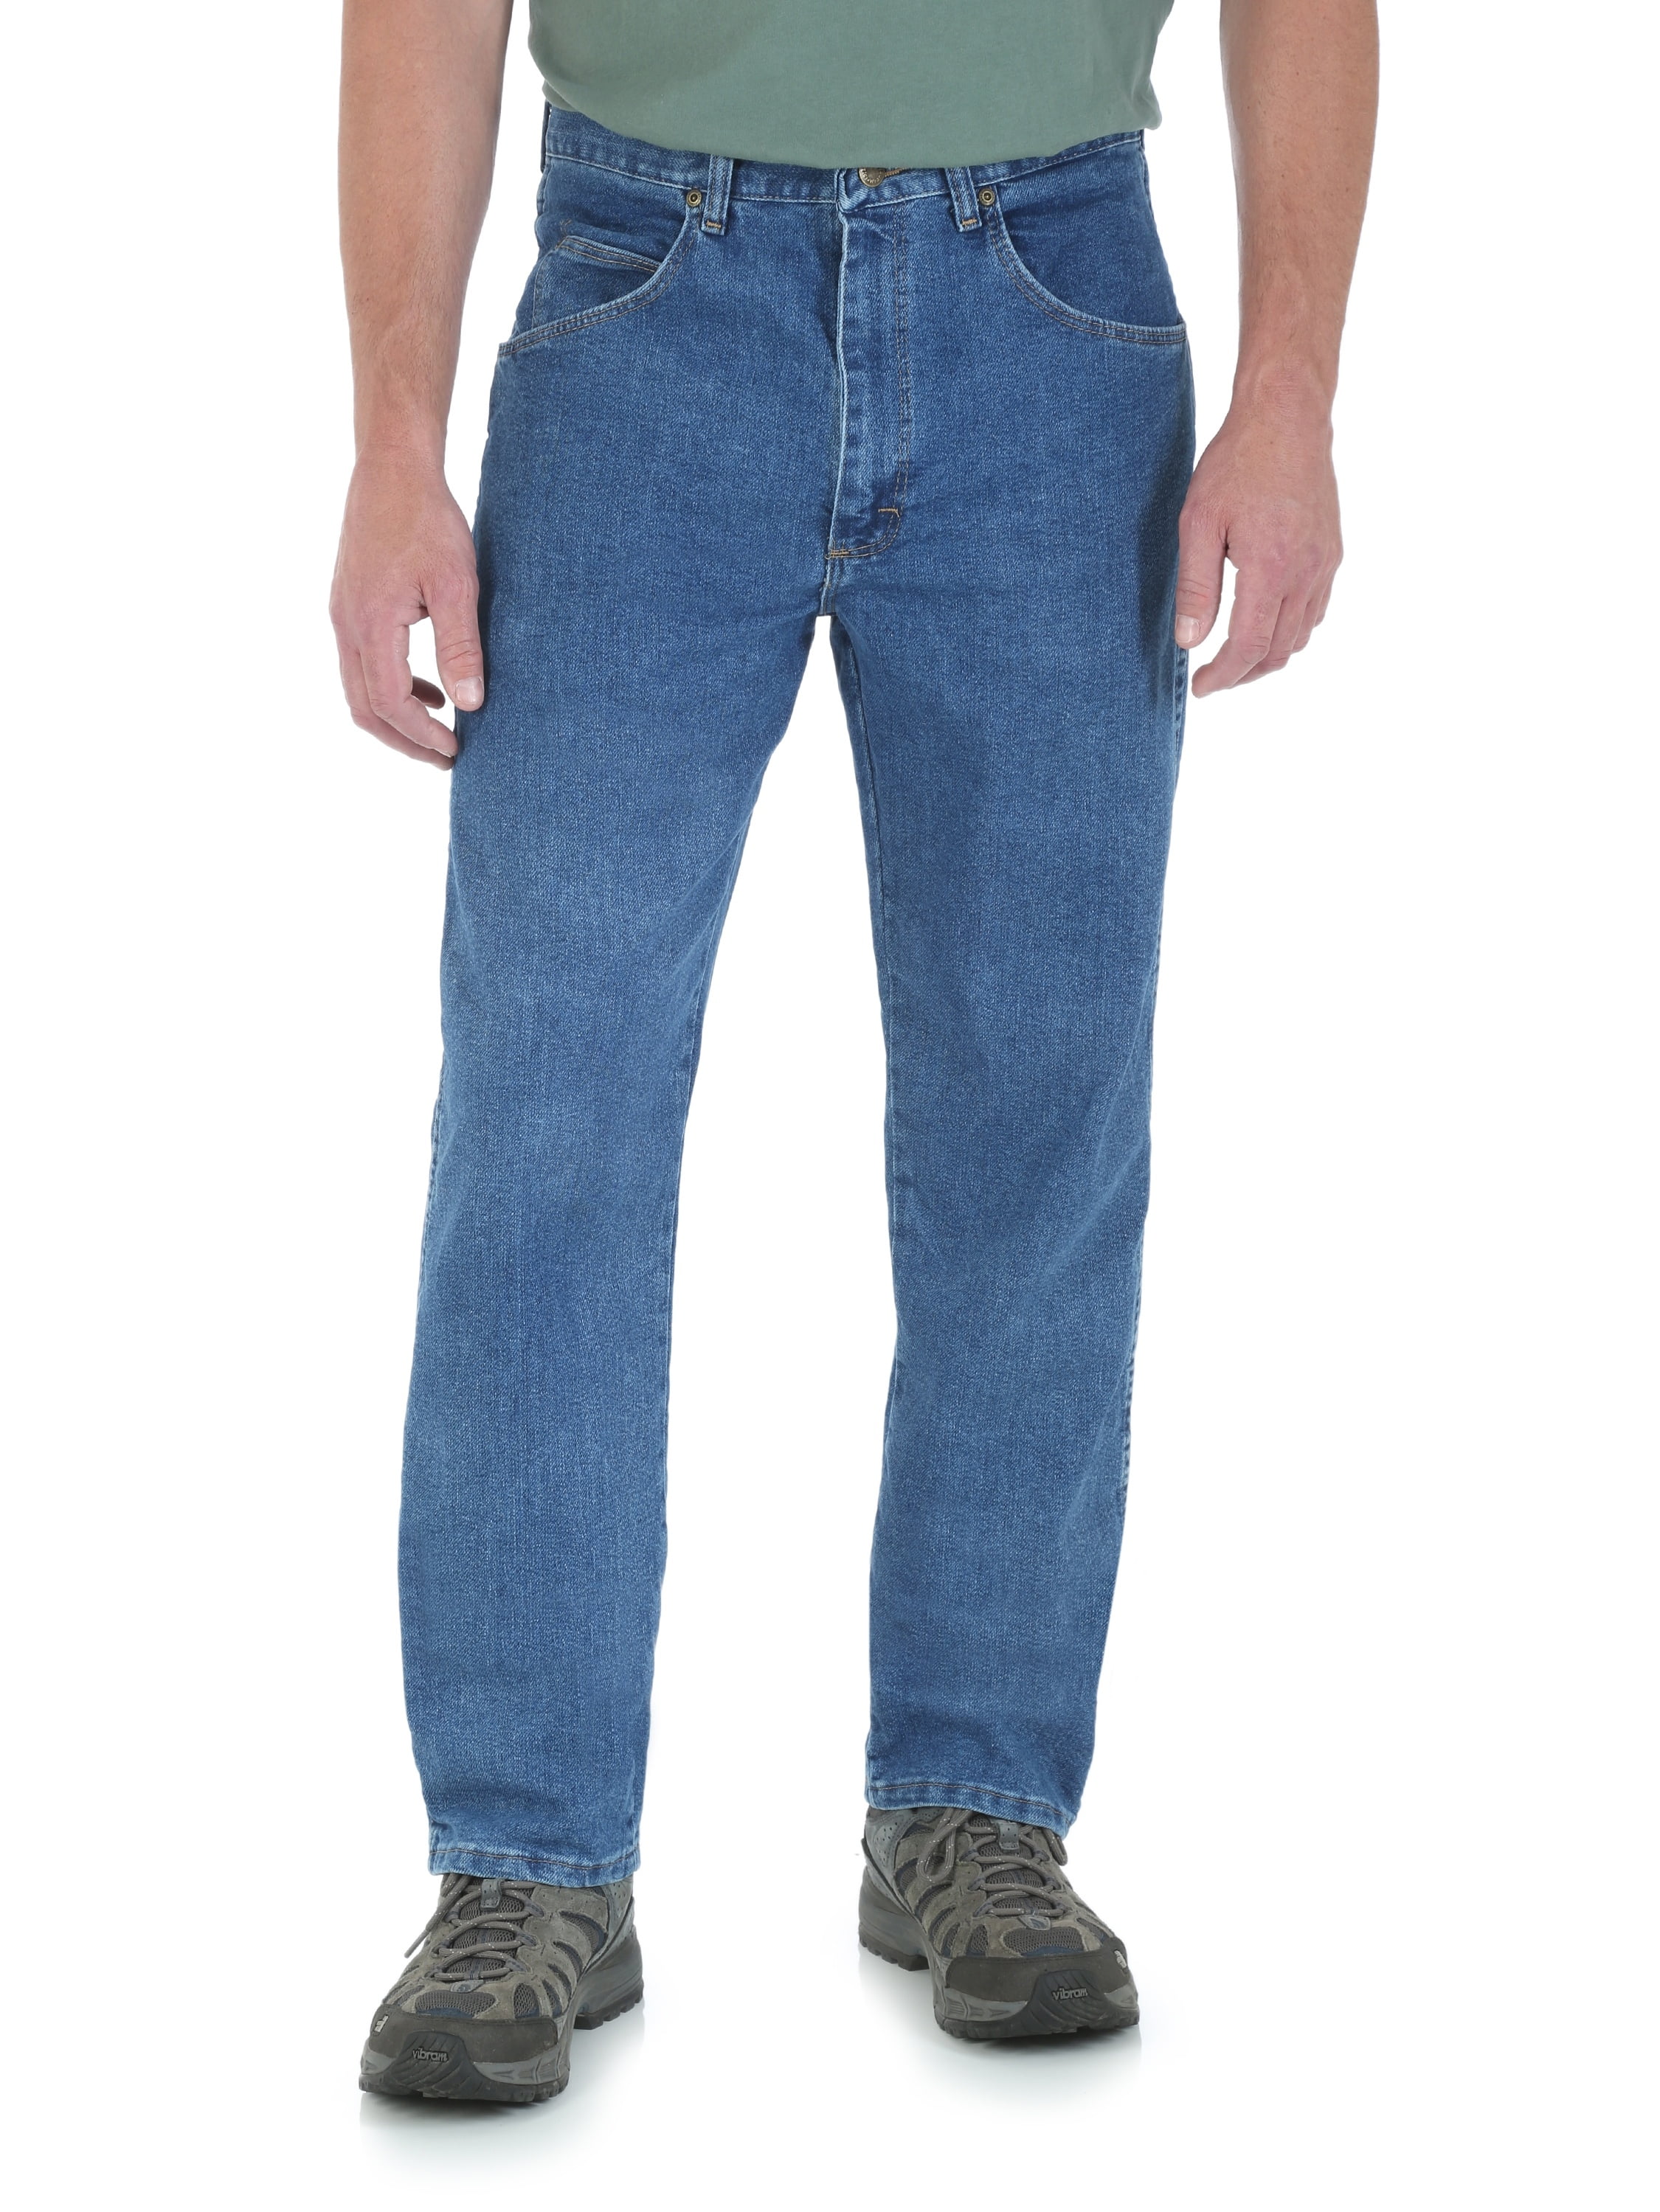 Wrangler - Rugged Wear Stretch Jean - Stonewashed - Walmart.com ...